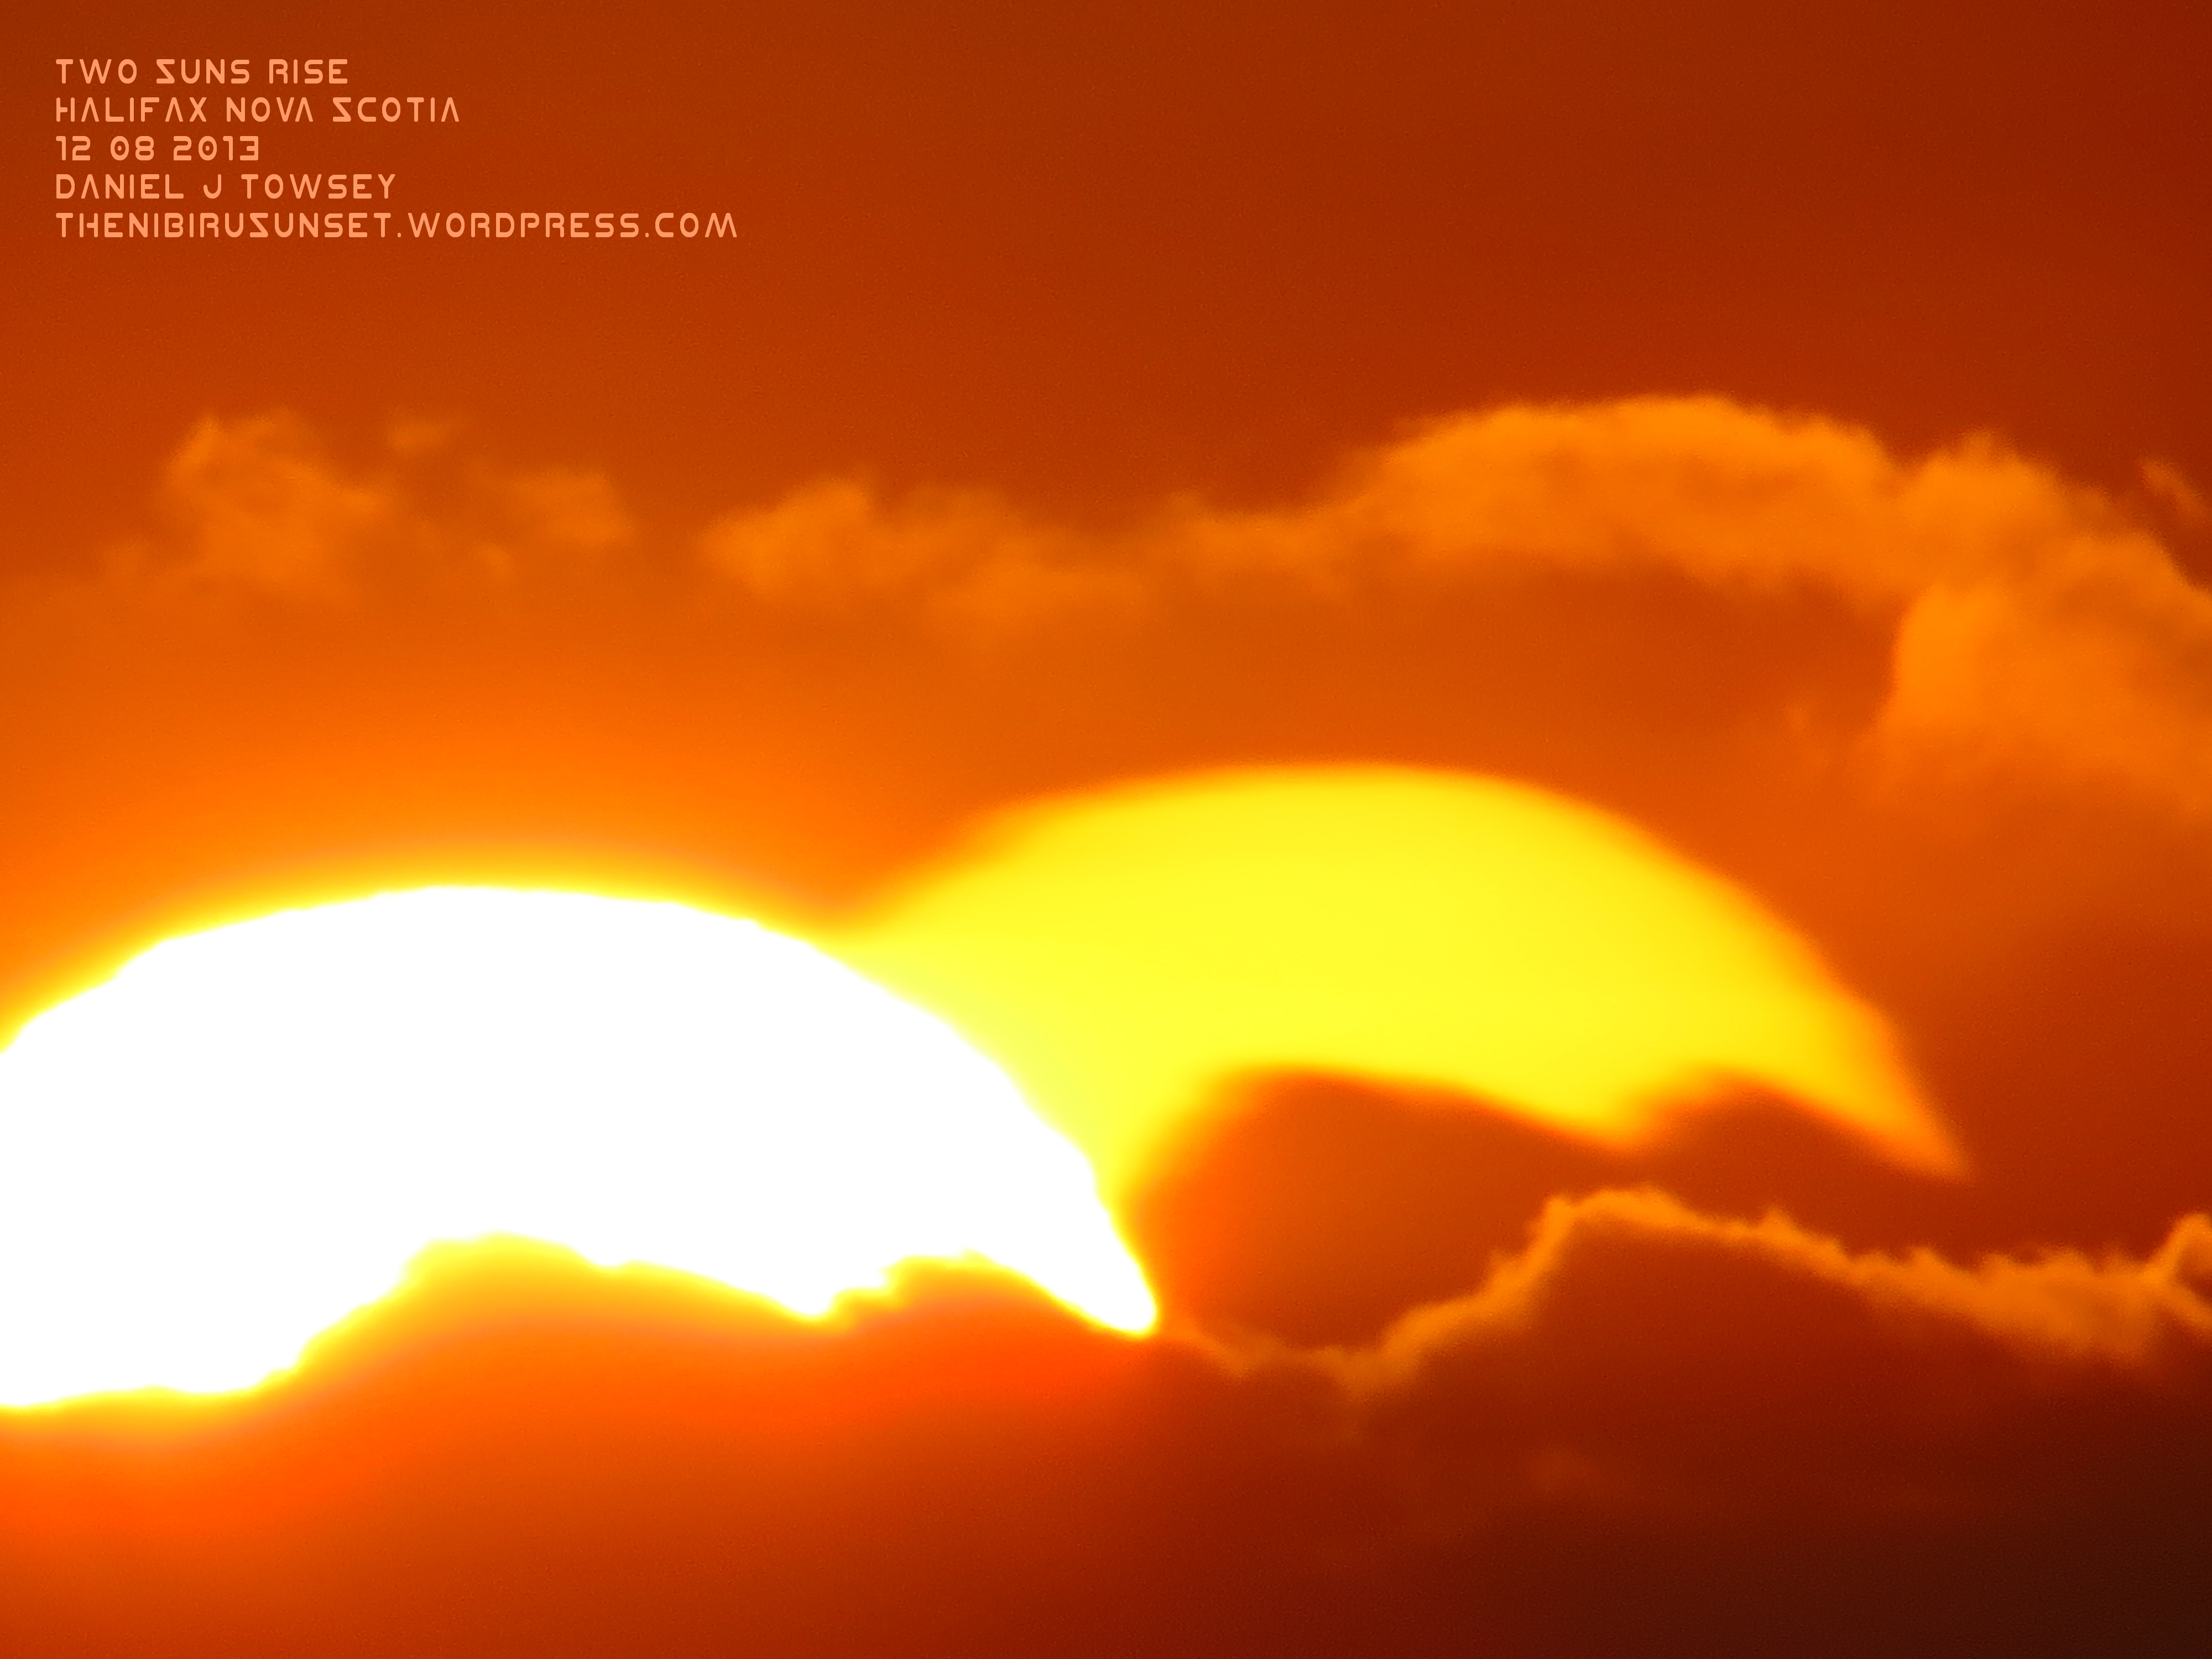 Two Suns Rise Over Halifax Nova Scotia 12 08 2013 | The Nibiru Sunset